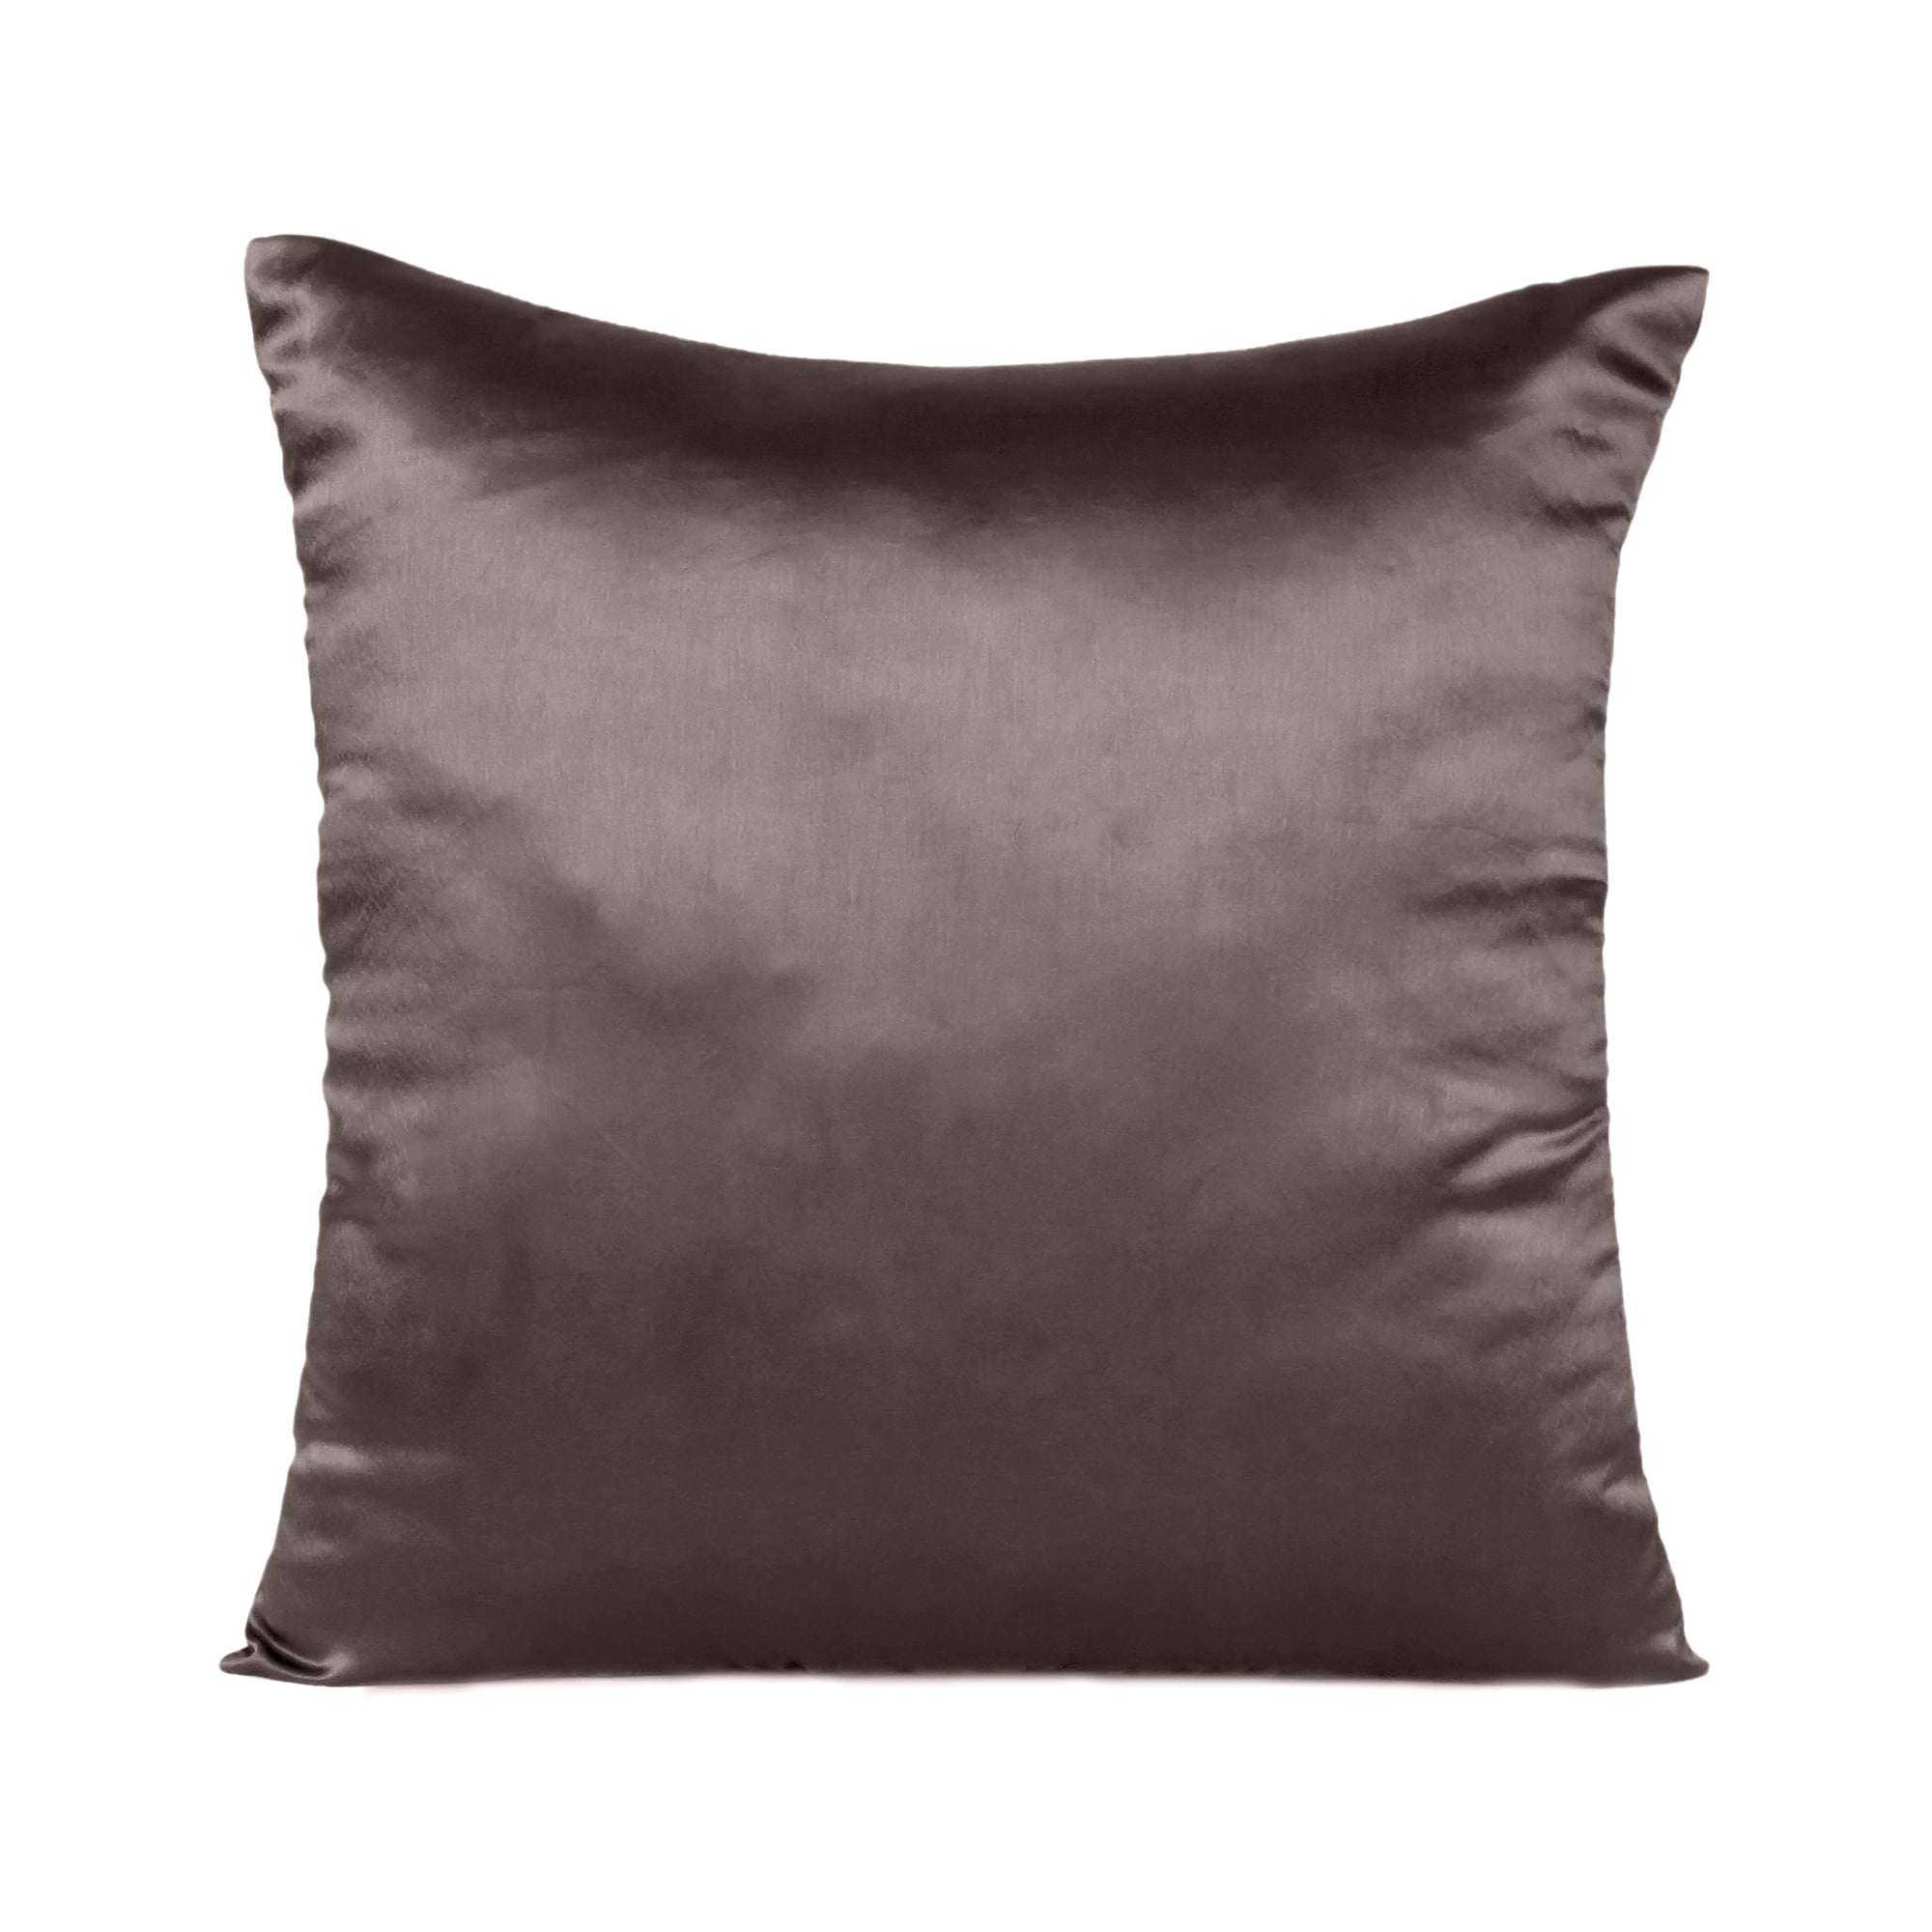 1x Satin Standard Pillow Case Cushion Cover Bedding Pillowcase For Sofa Bedroom 